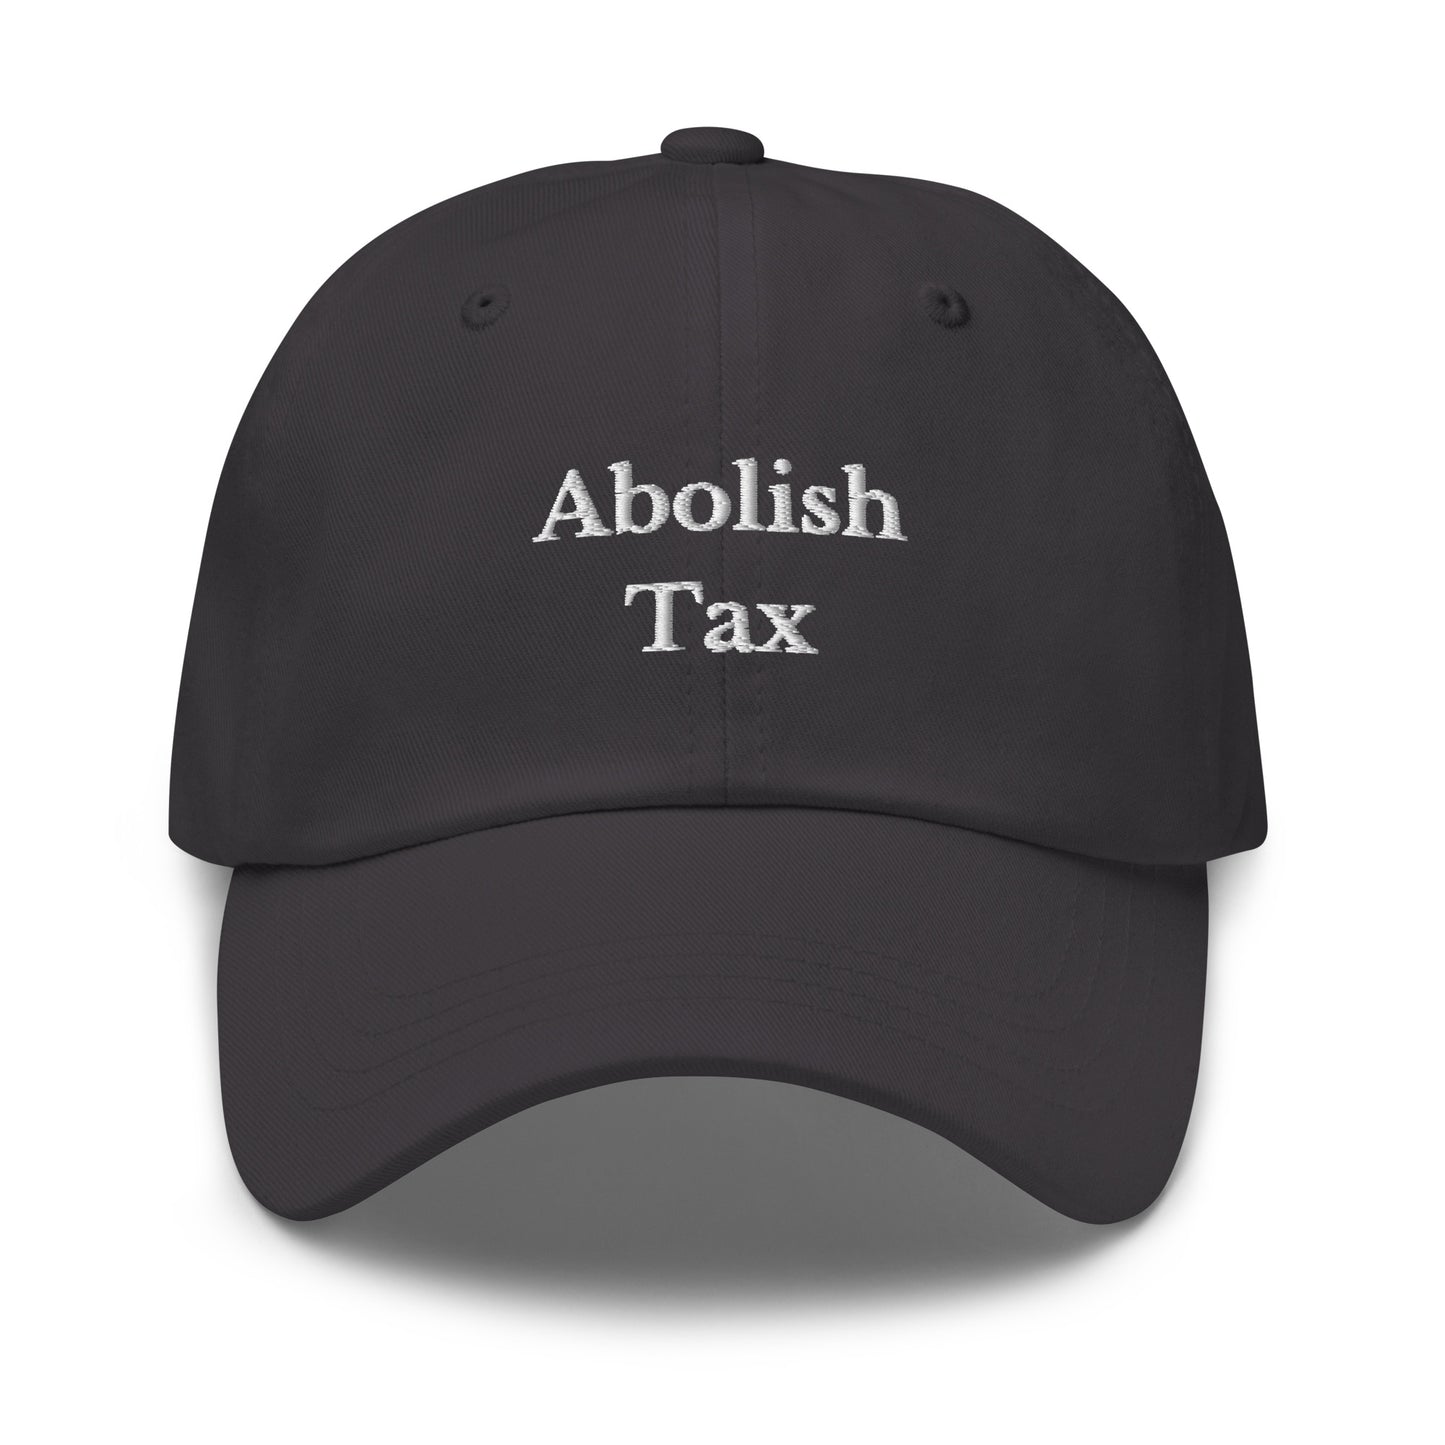 Abolish Tax Cap